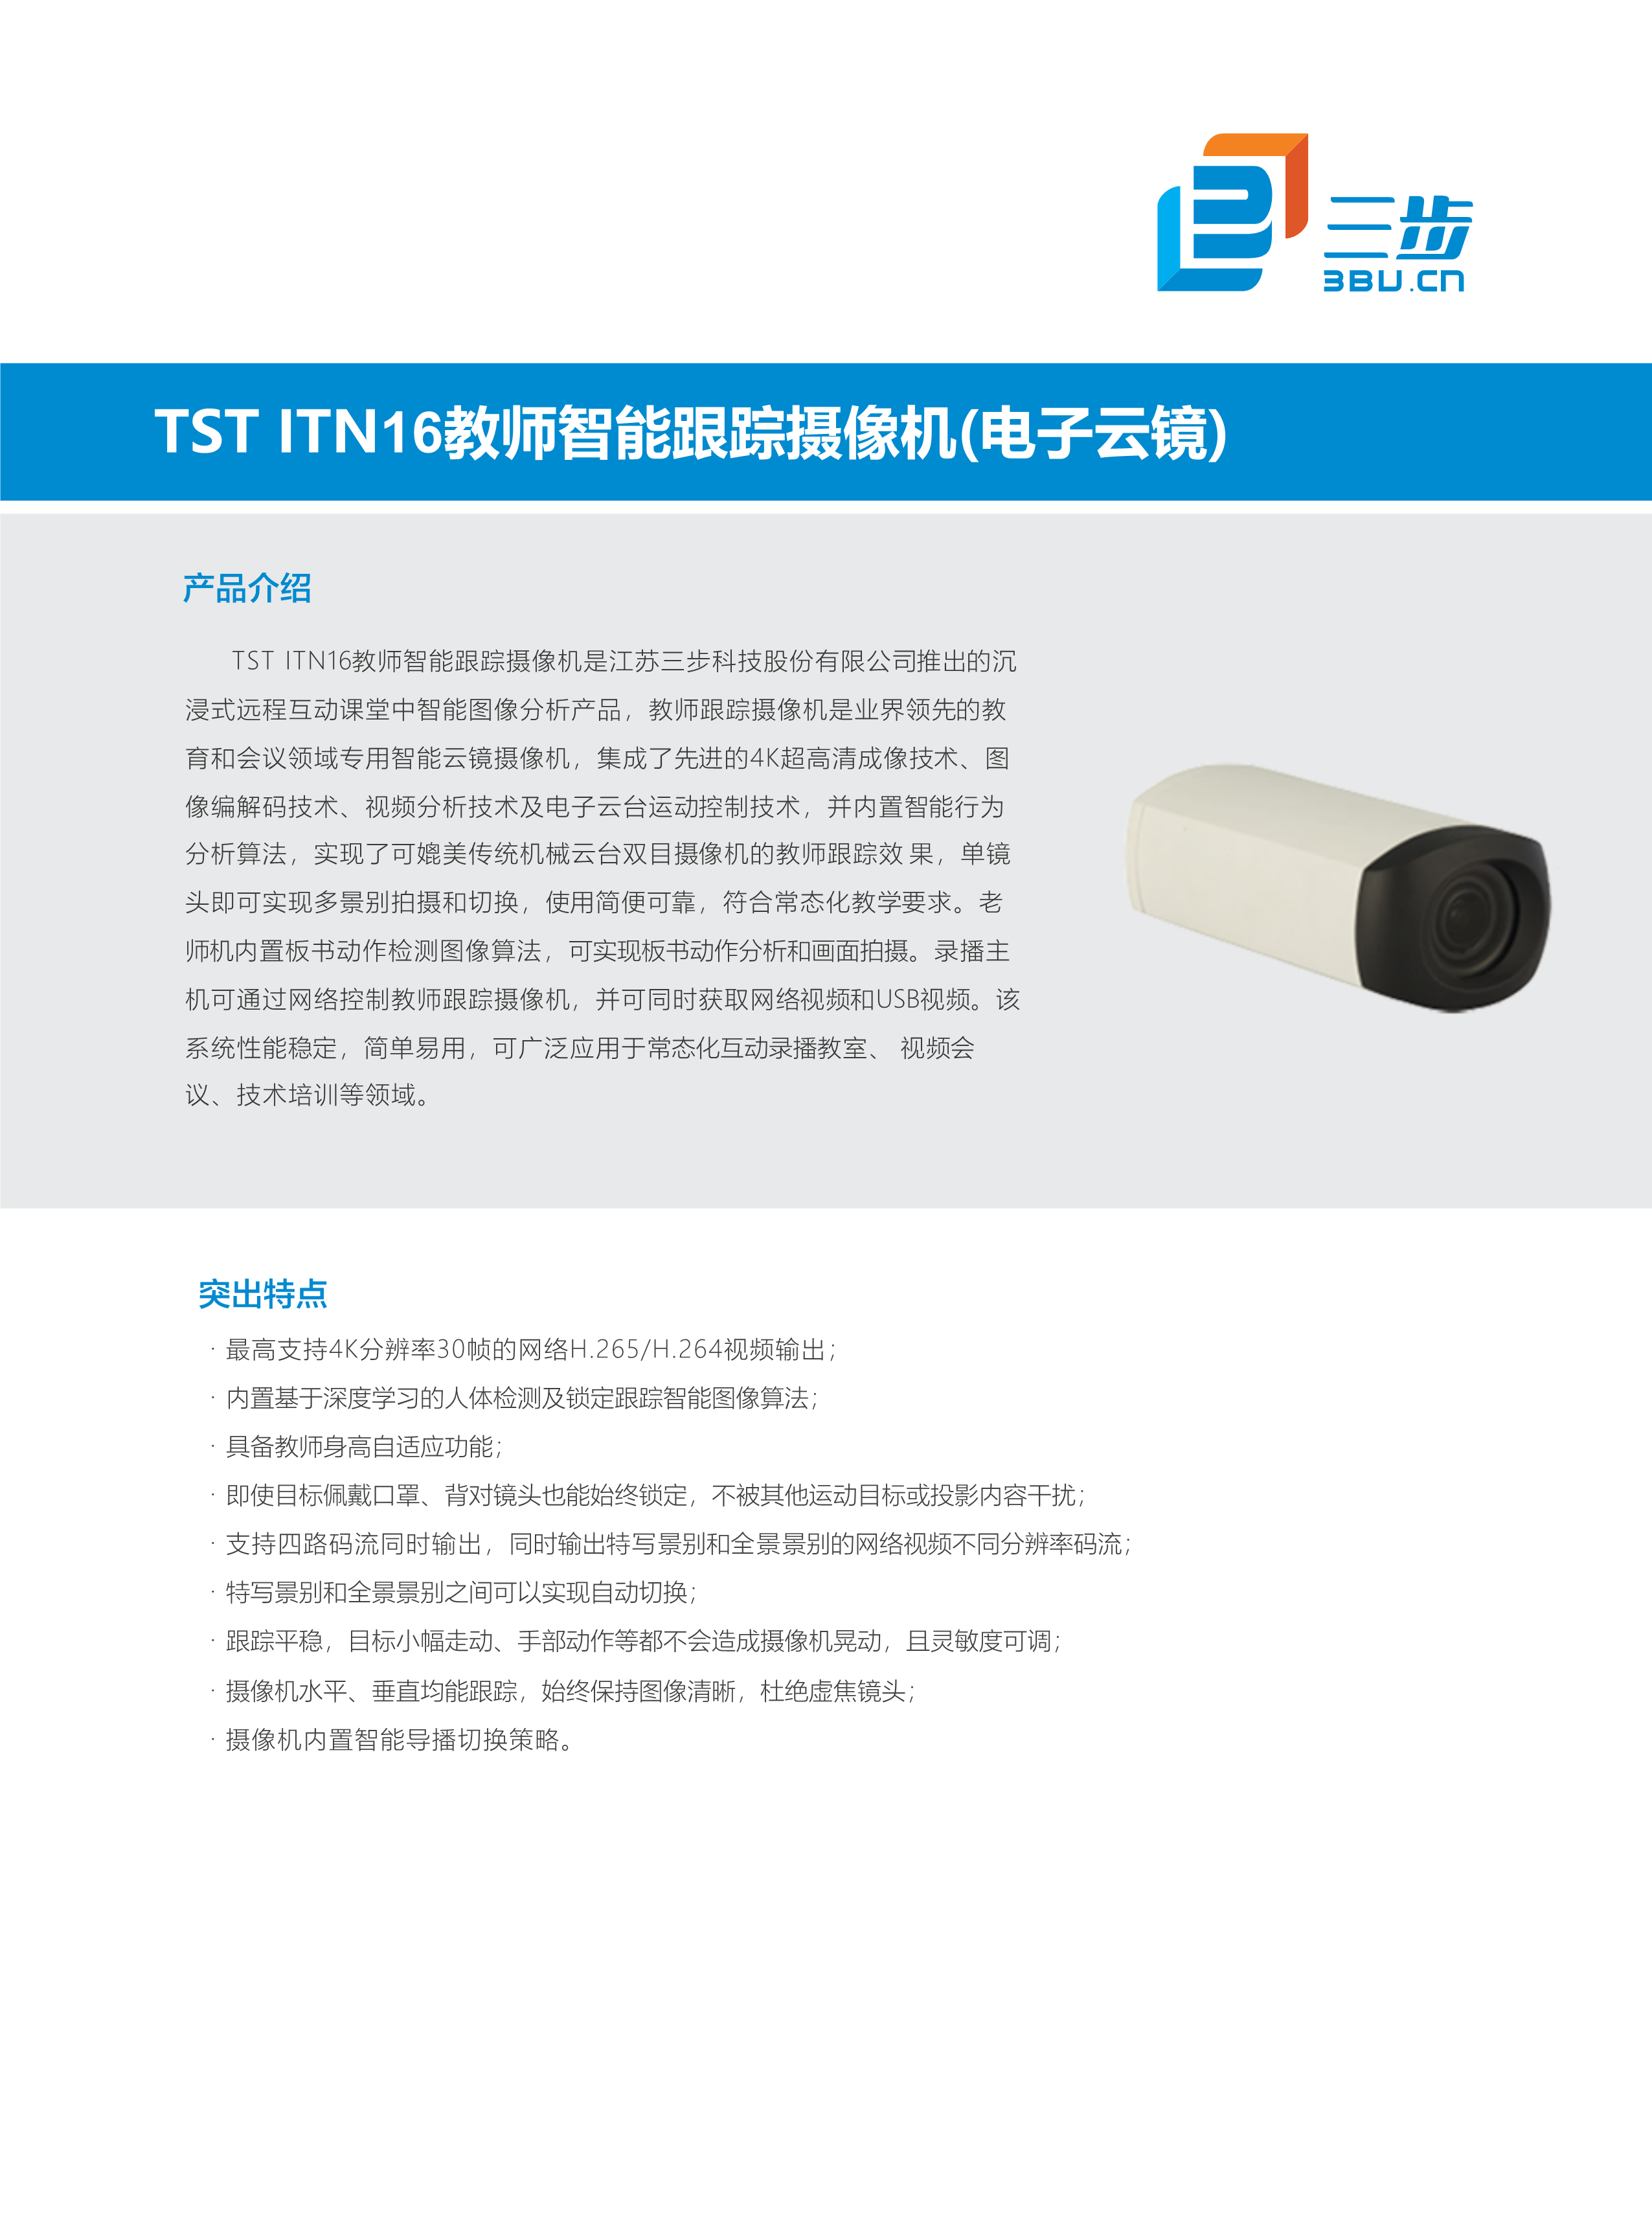 TST ISN16教师-智能跟踪摄像机_1.png